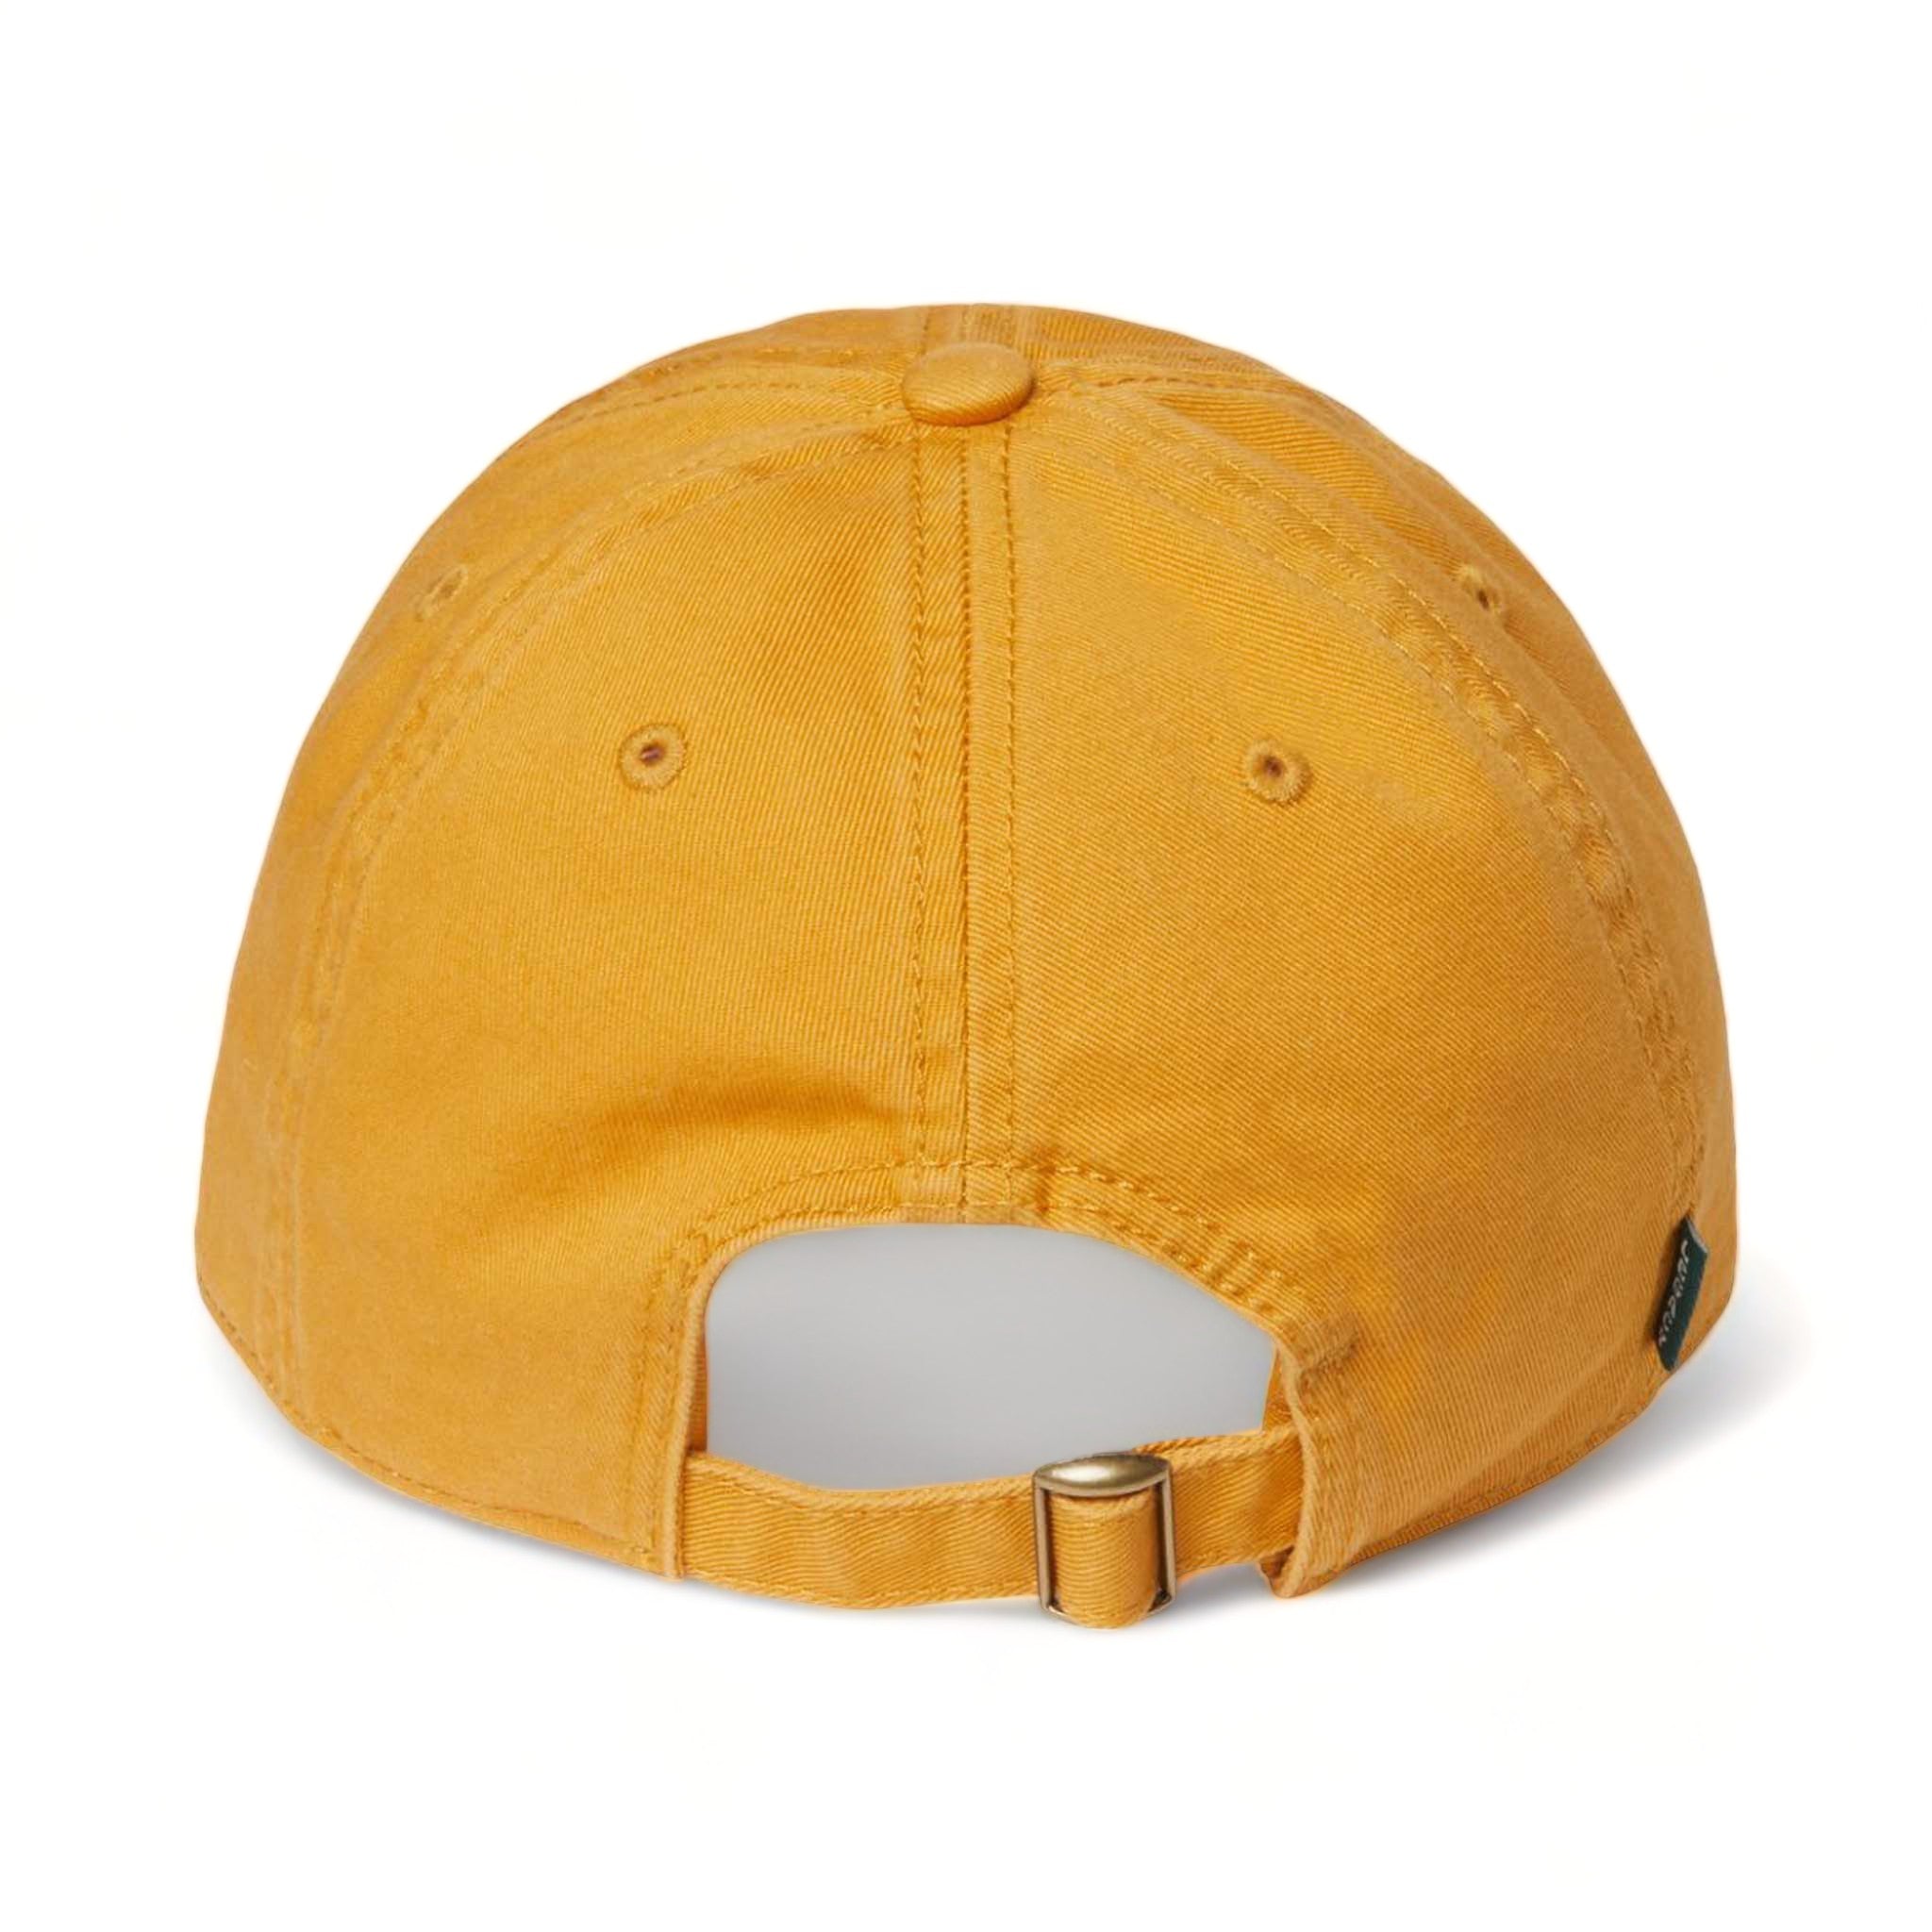 Back view of LEGACY EZA custom hat in mustard